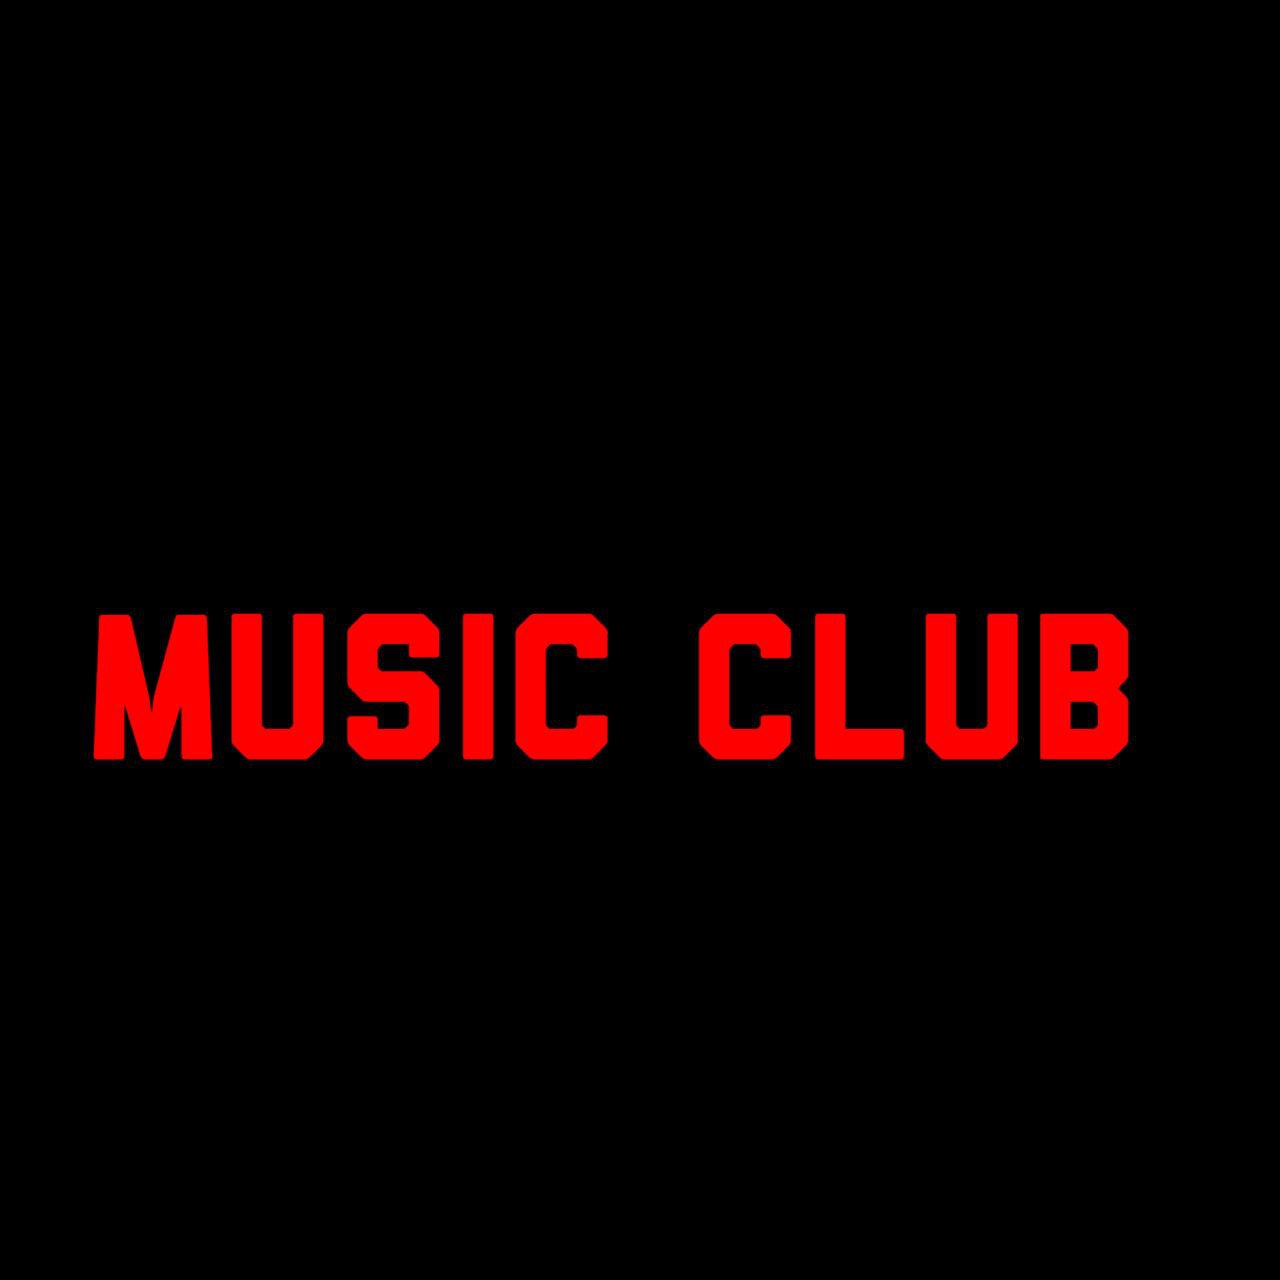 Music club - Про любовь